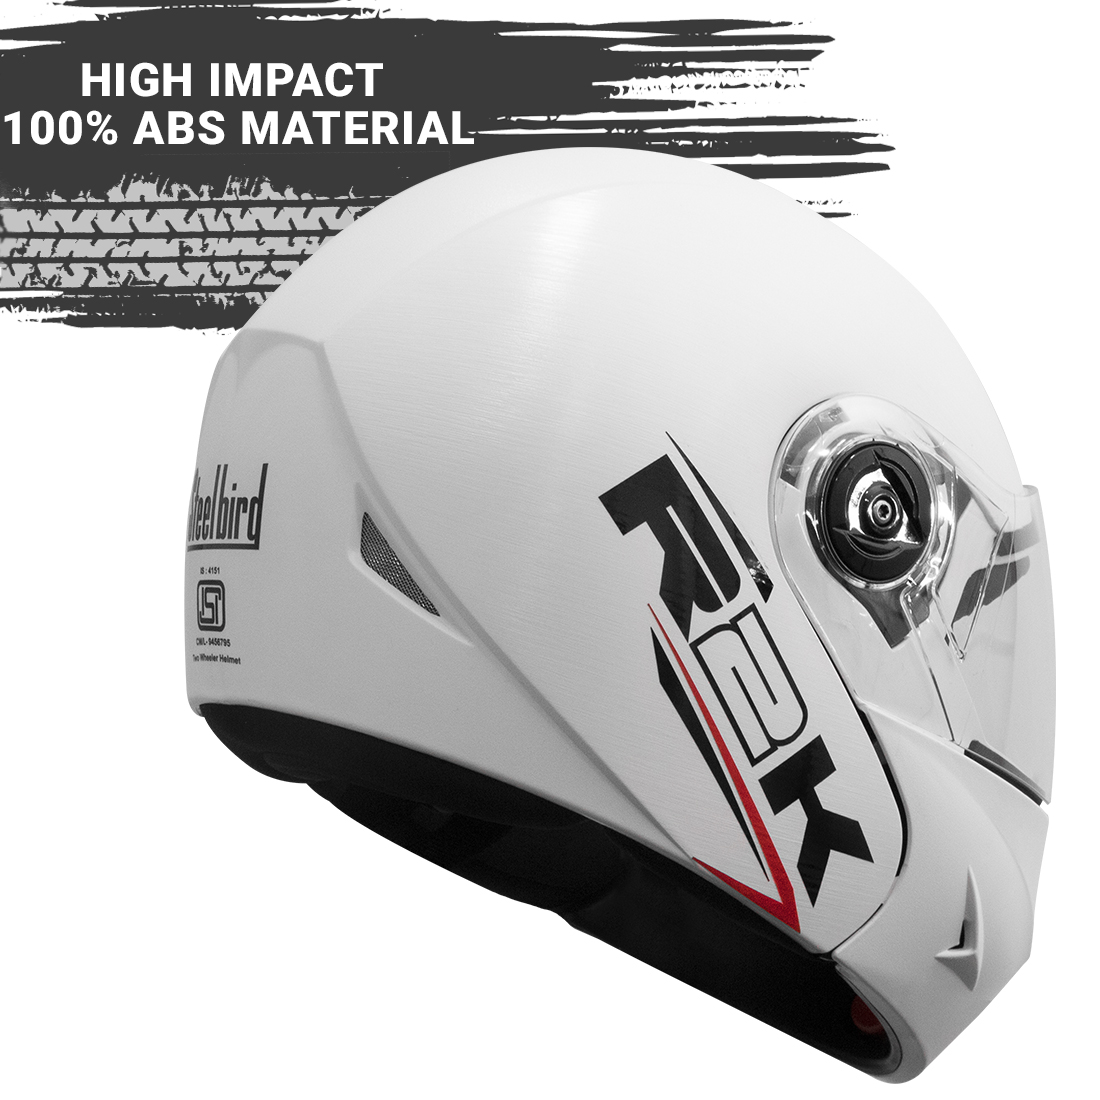 Steelbird SB-45 R2K Oska ISI Certified Flip Up Helmet (White With Clear Visor)